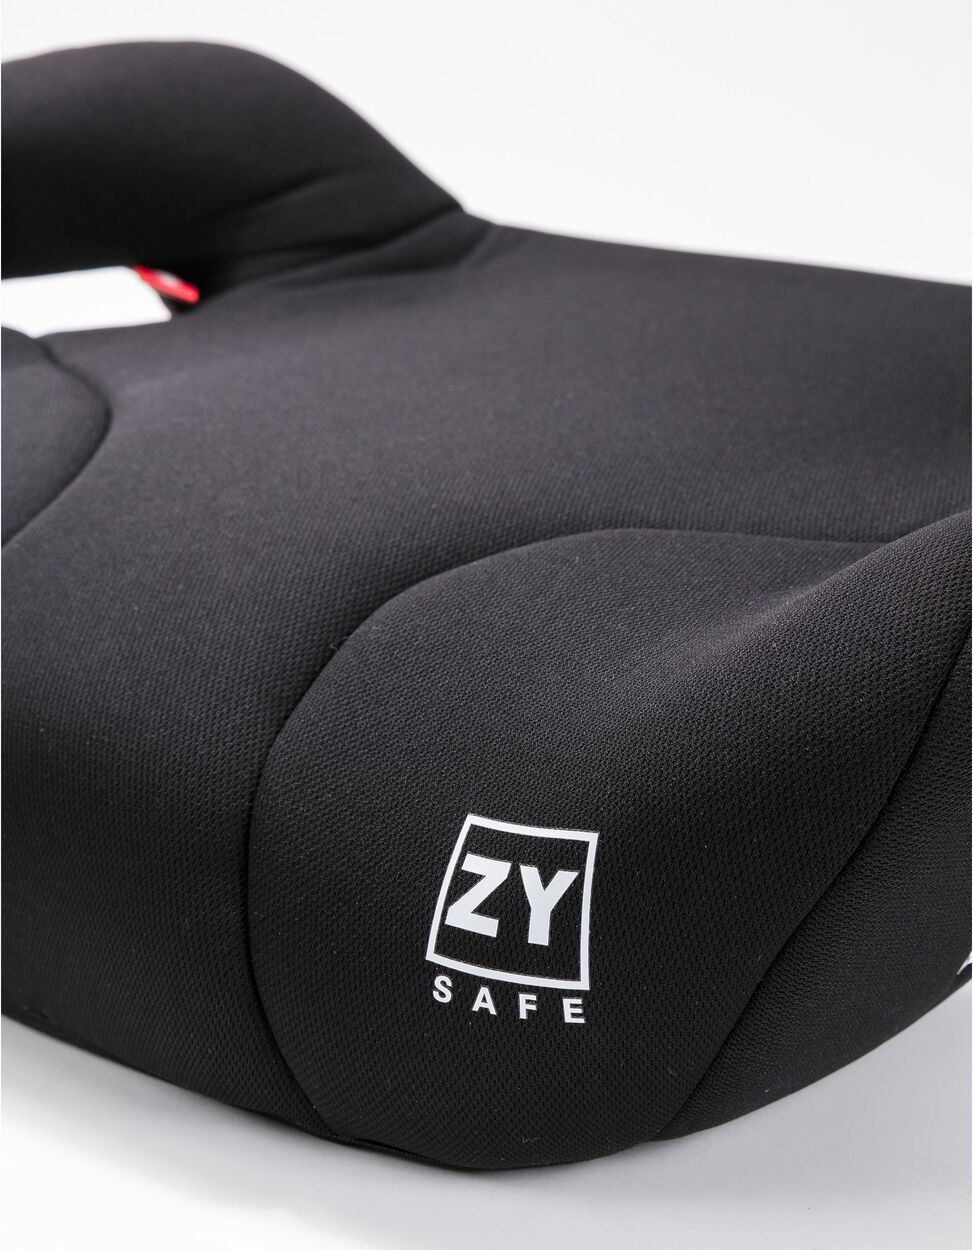 Asiento Elevable Zy Safe Black